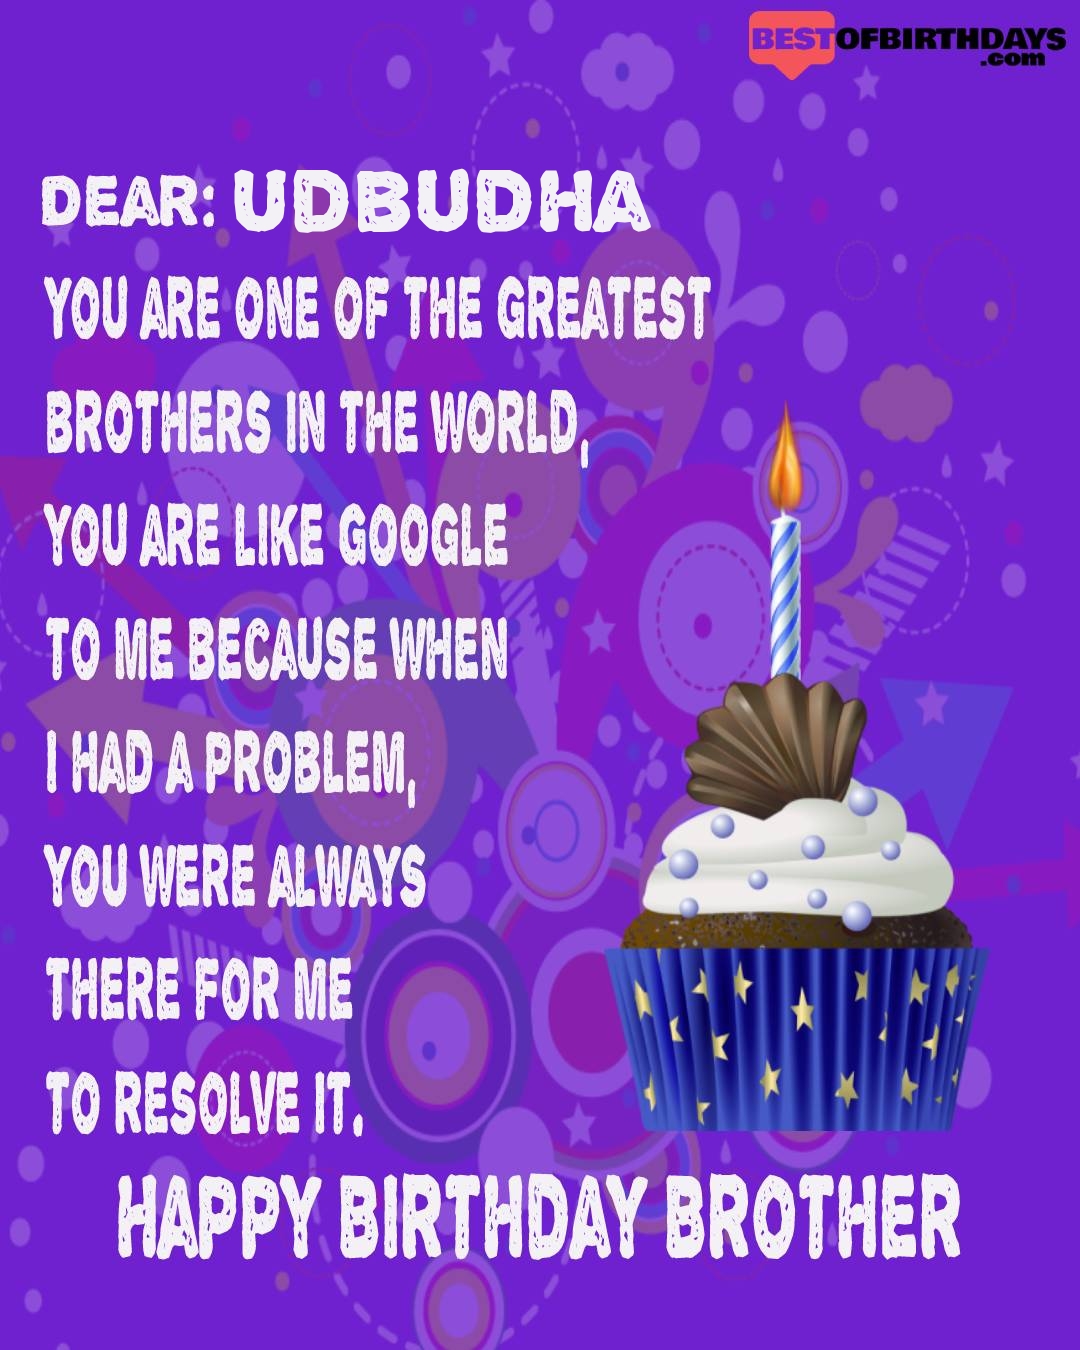 Happy birthday udbudha bhai brother bro